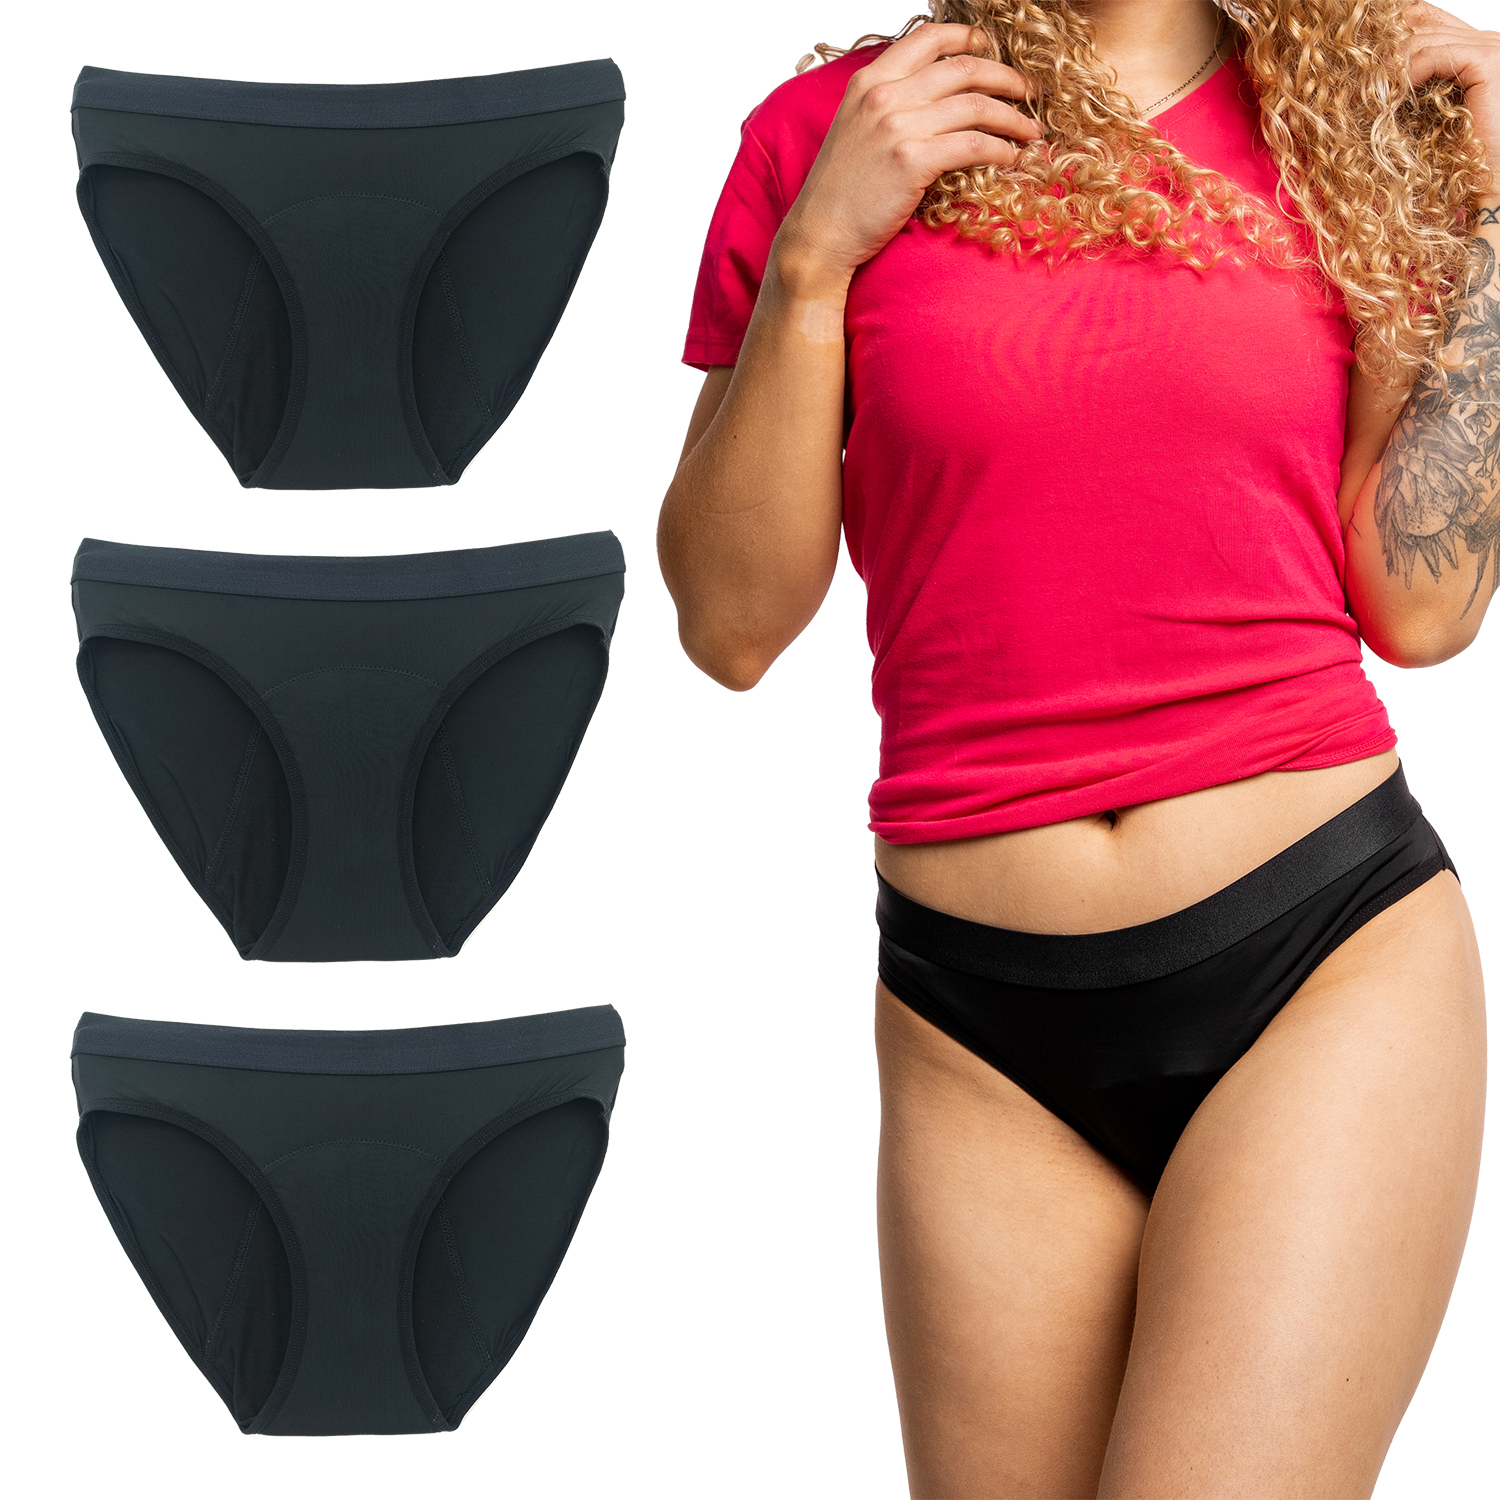 Women's Incontinence Underwear Panties - 3pk.